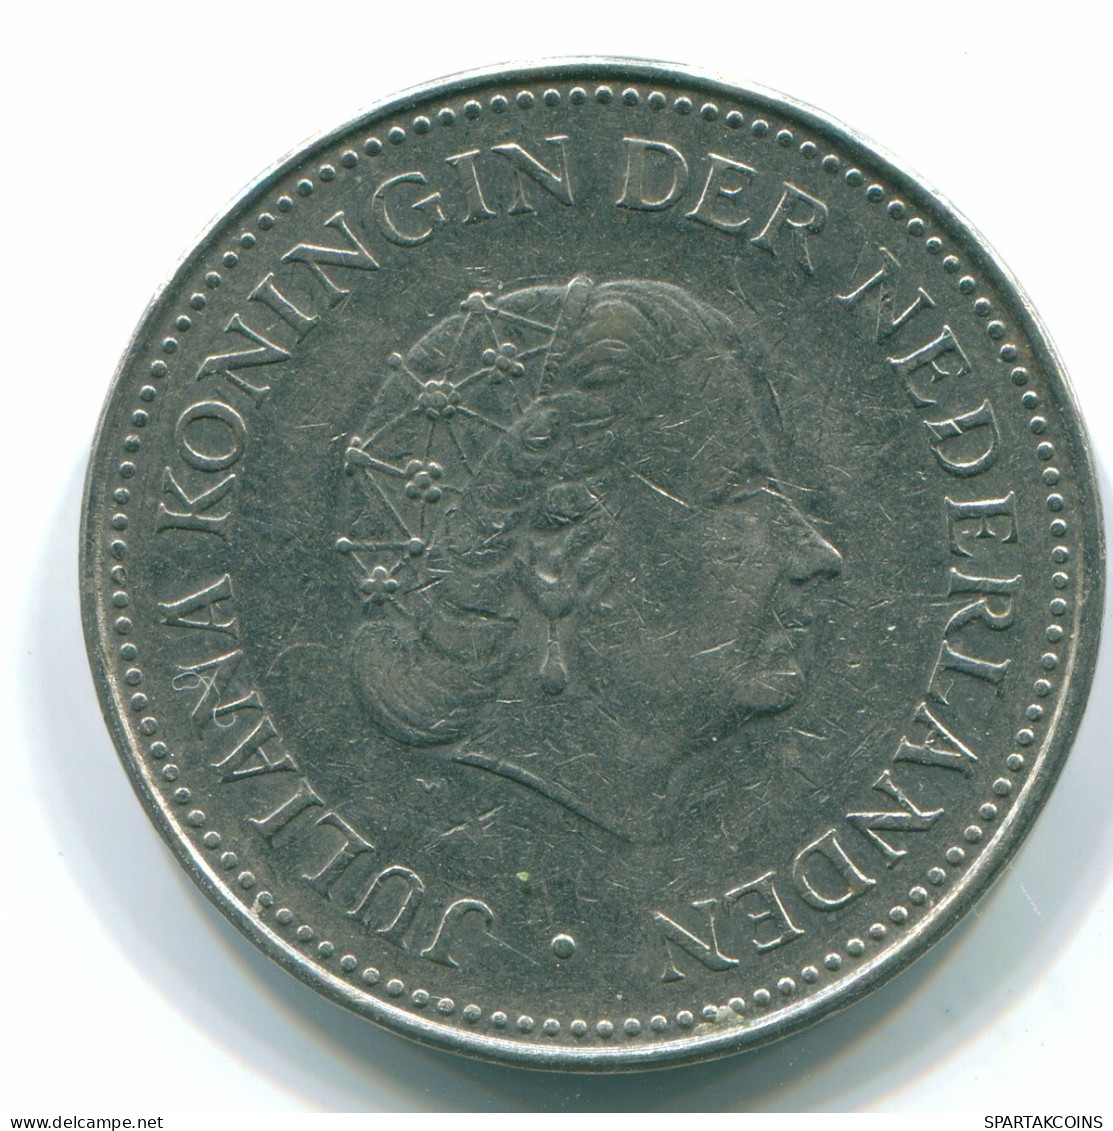 1 GULDEN 1971 NETHERLANDS ANTILLES Nickel Colonial Coin #S11988.U.A - Netherlands Antilles